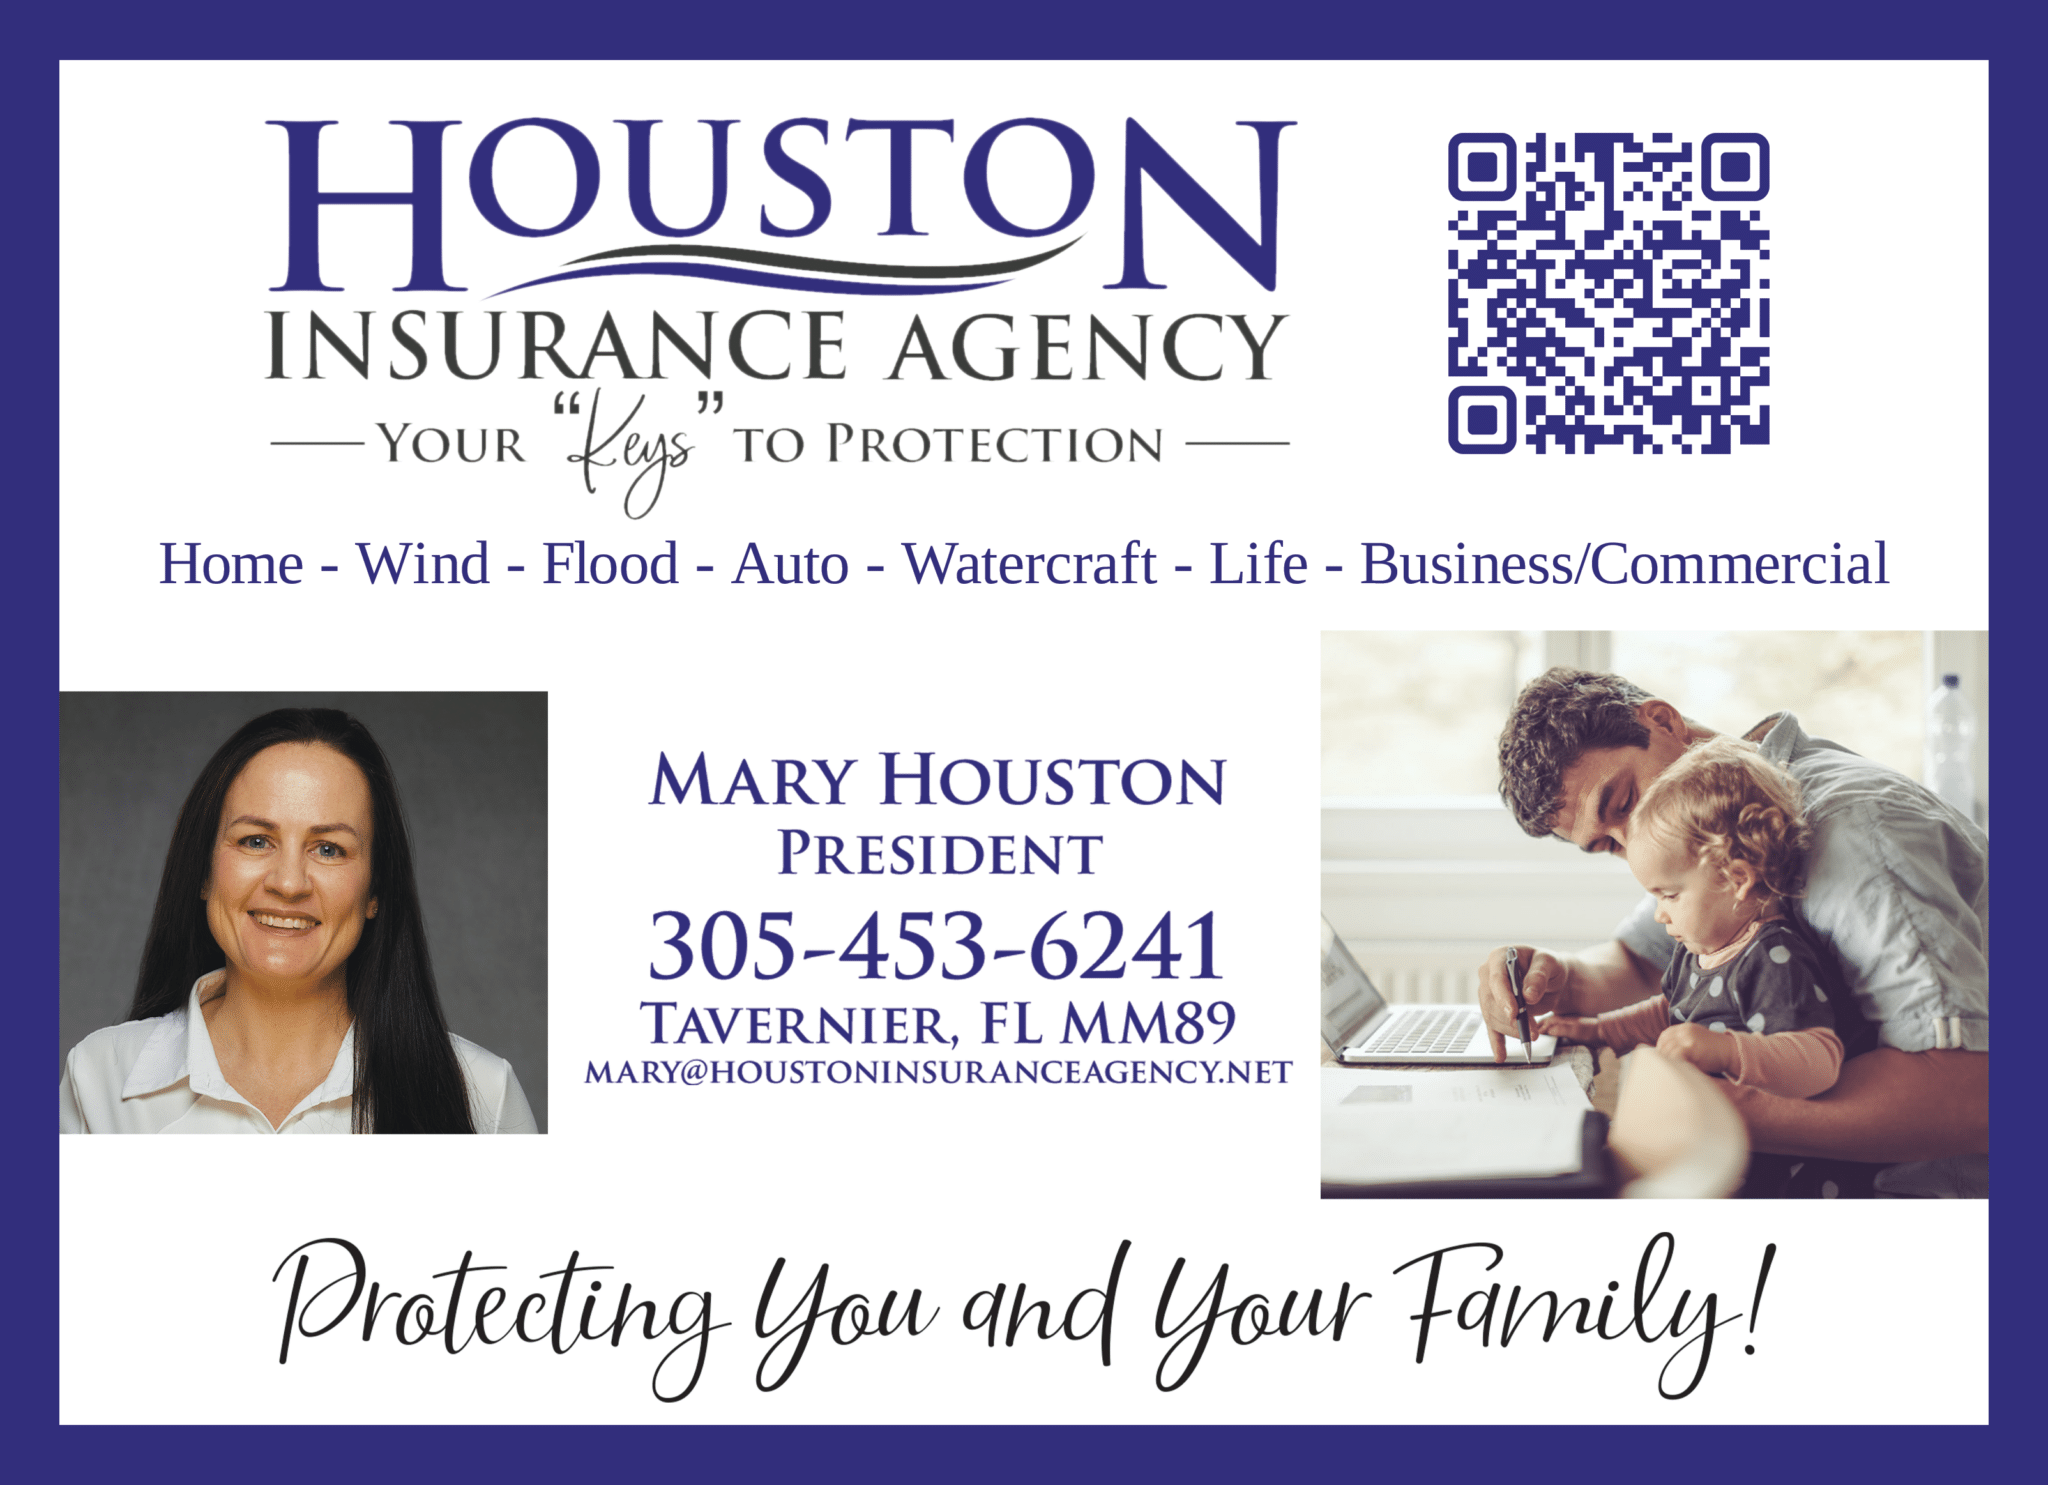 Houston Insurance Agency Inc.